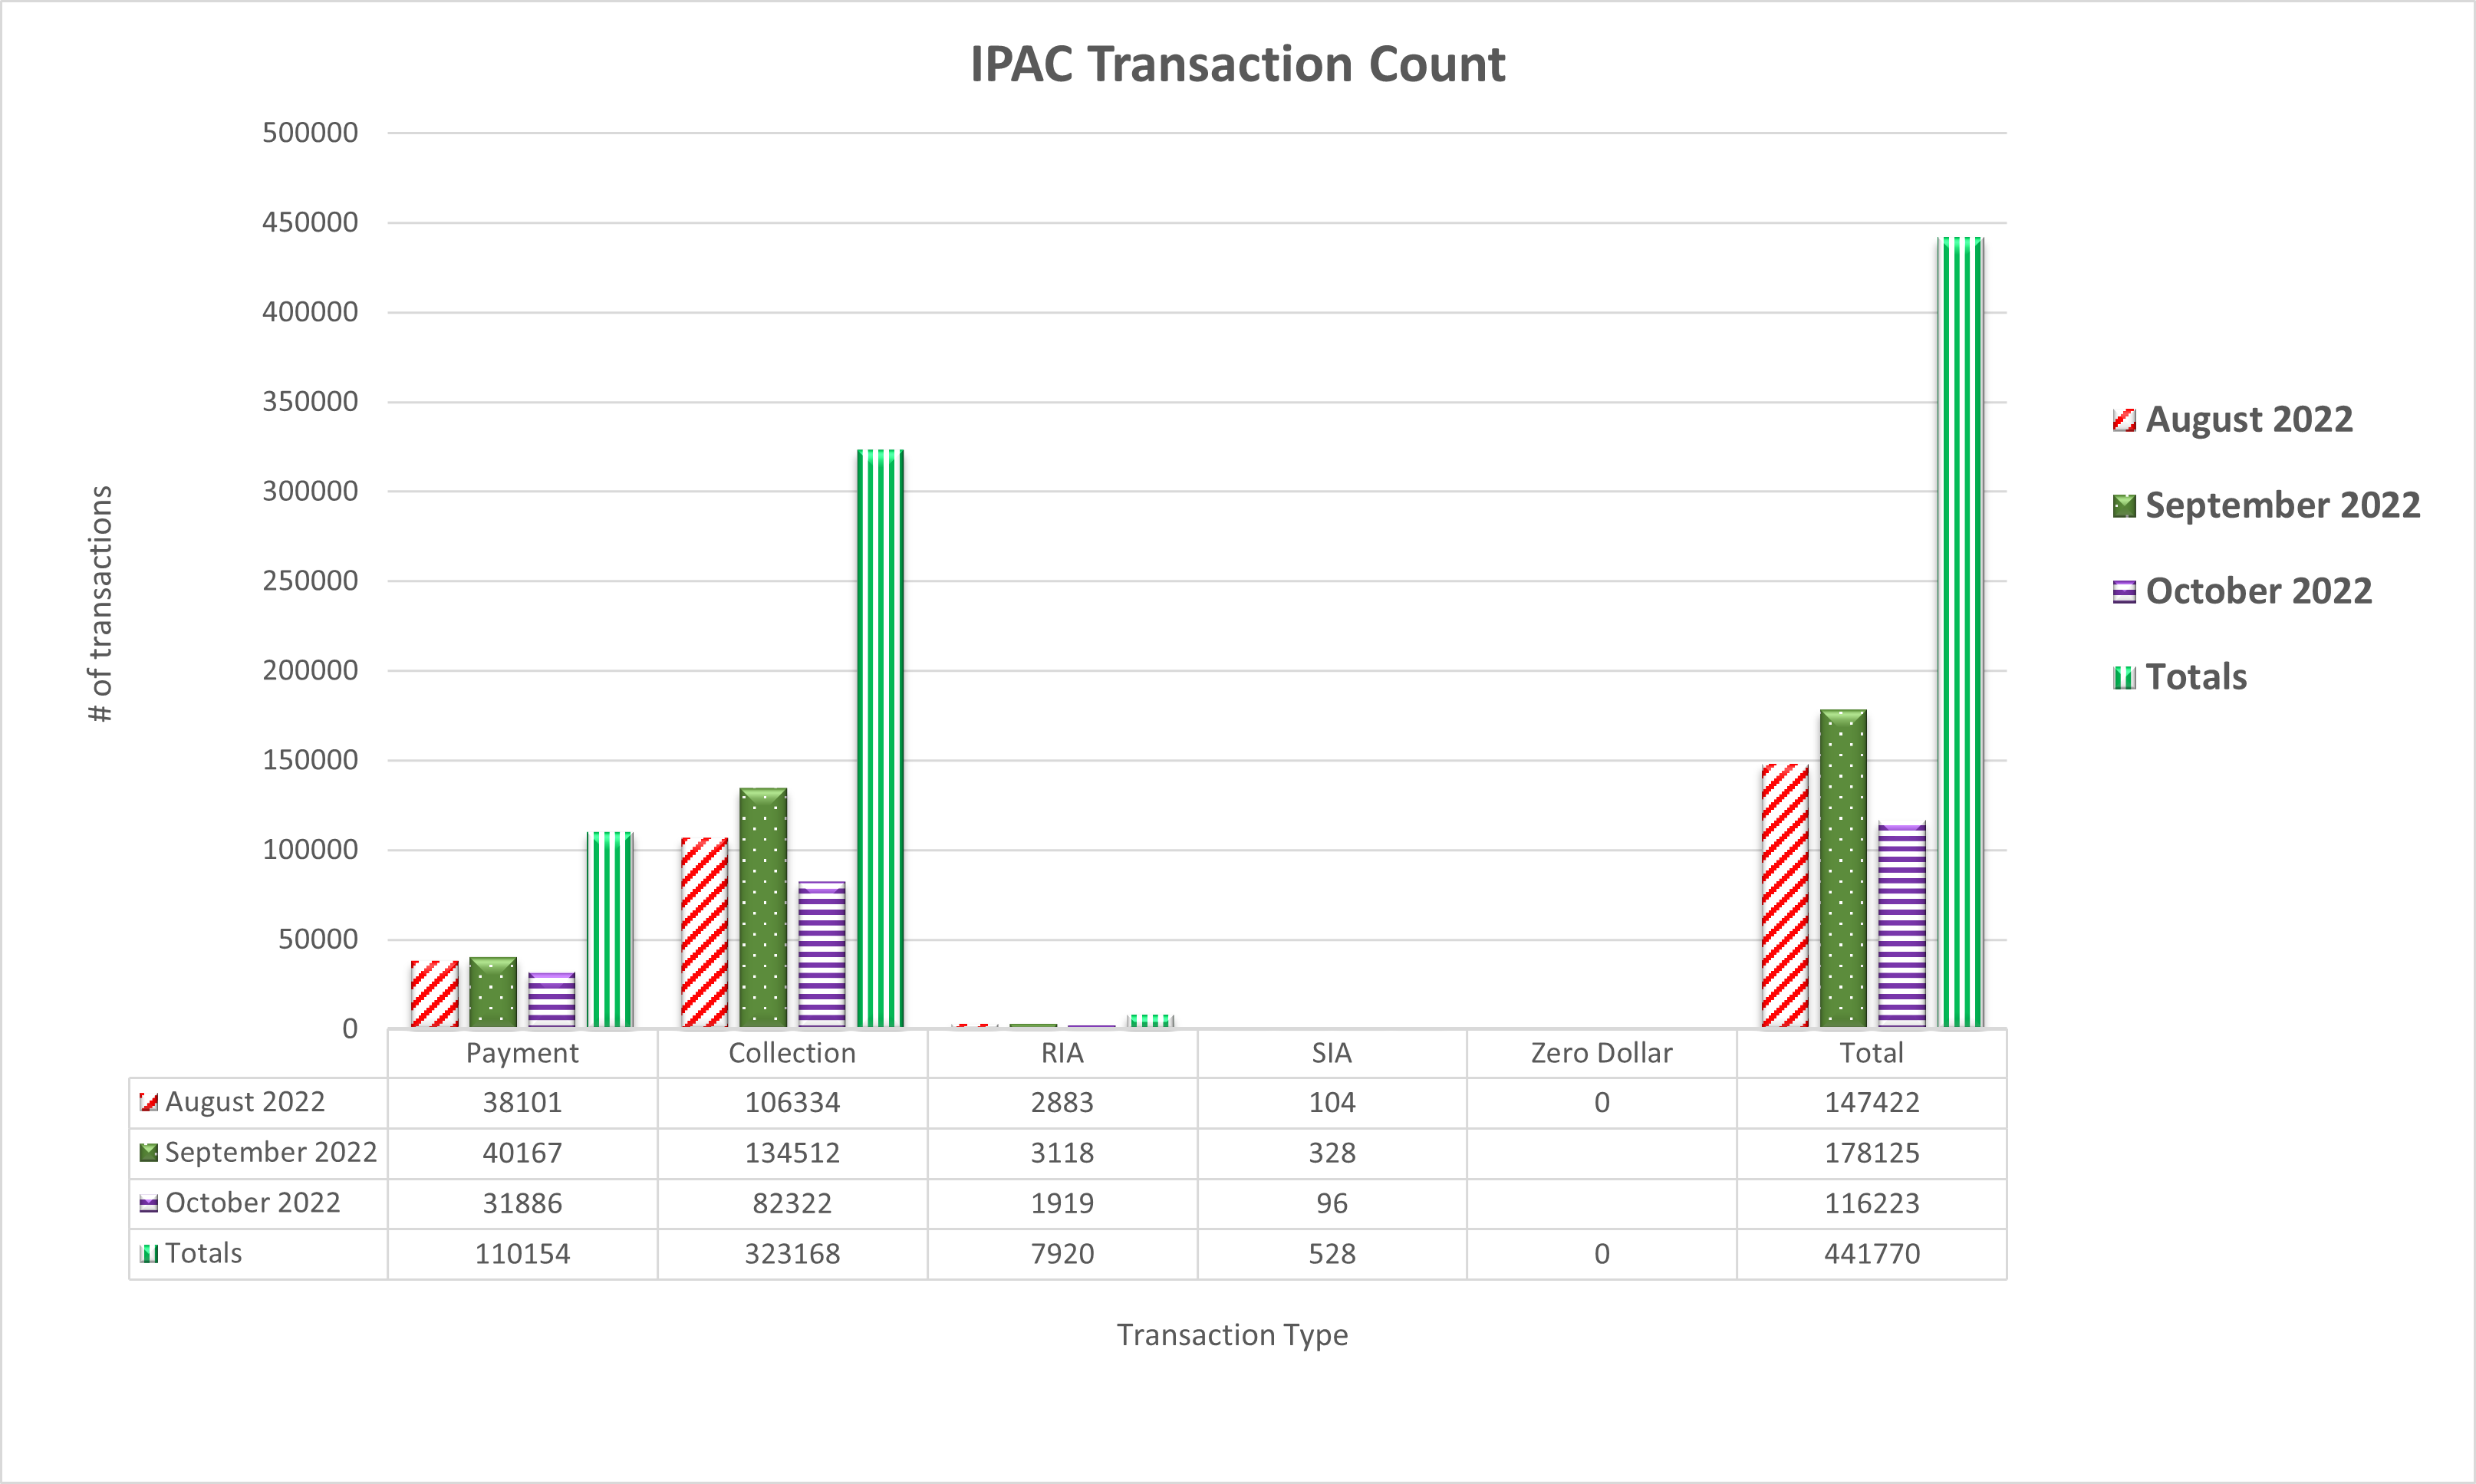 IPAC Transaction Count September 2022 through October 2022